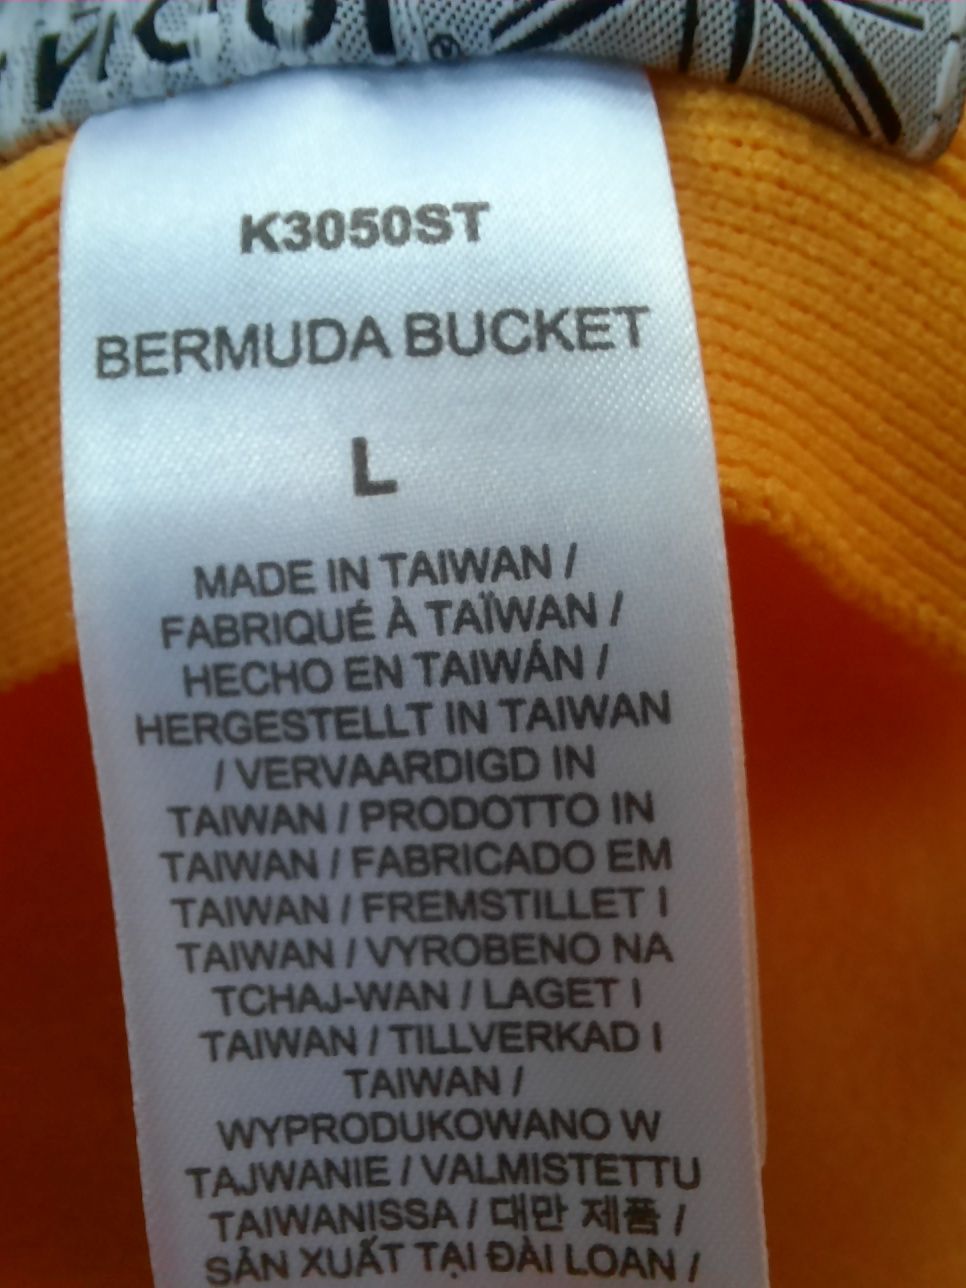 Kangol, Bermuda bucket, L